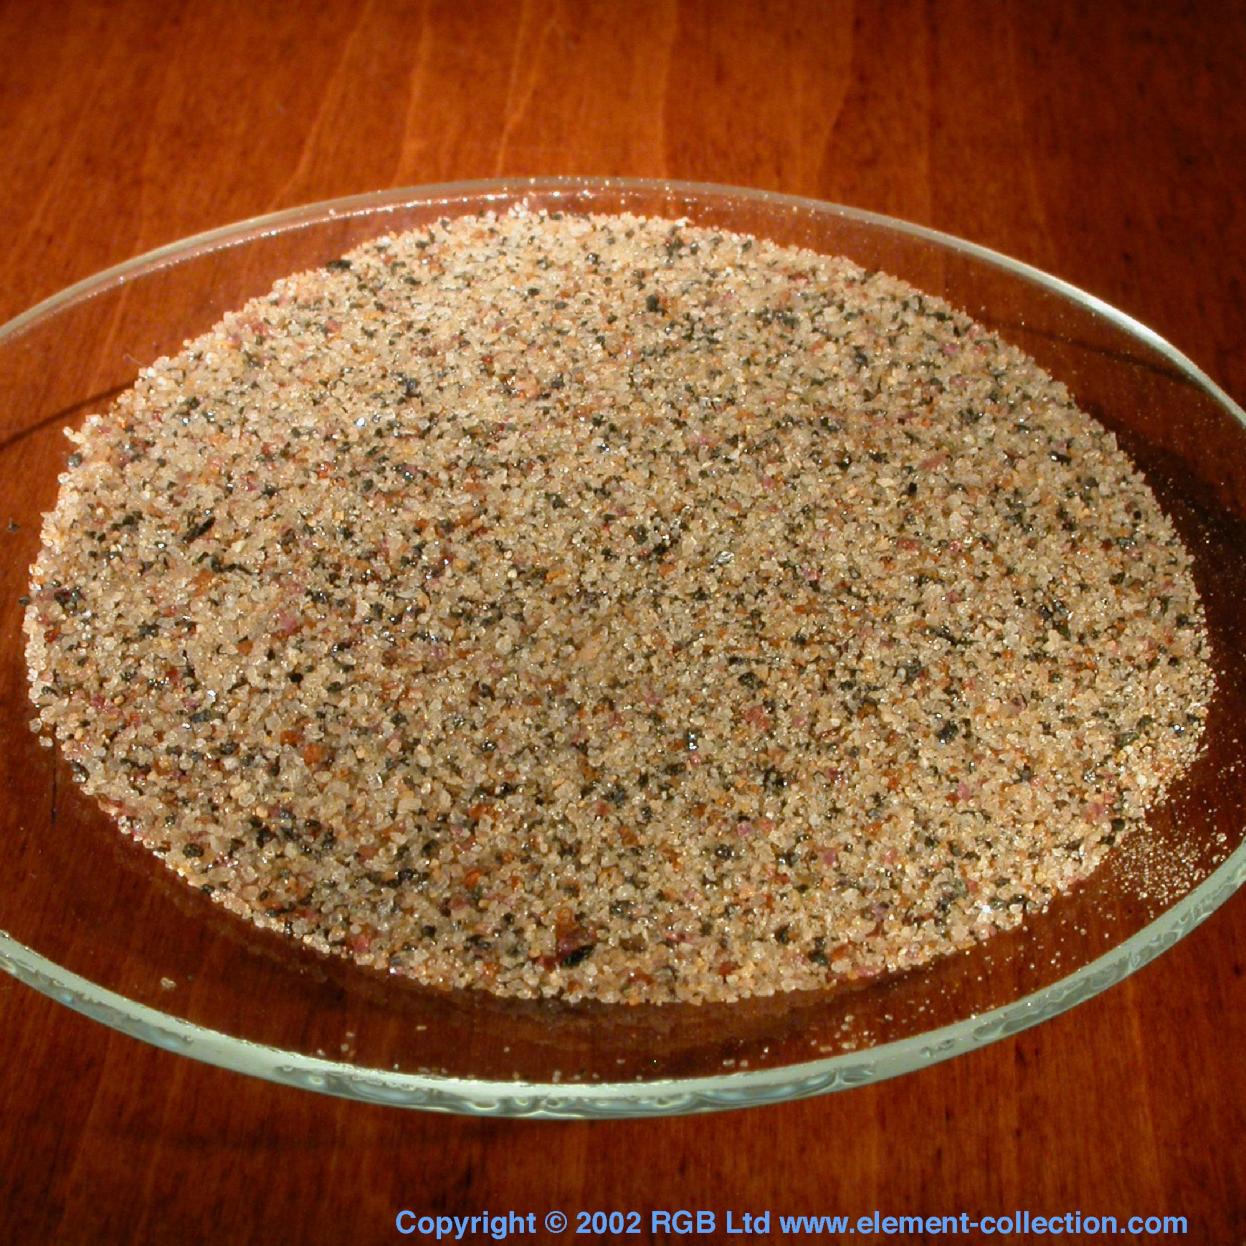 Lanthanum Monazite sand